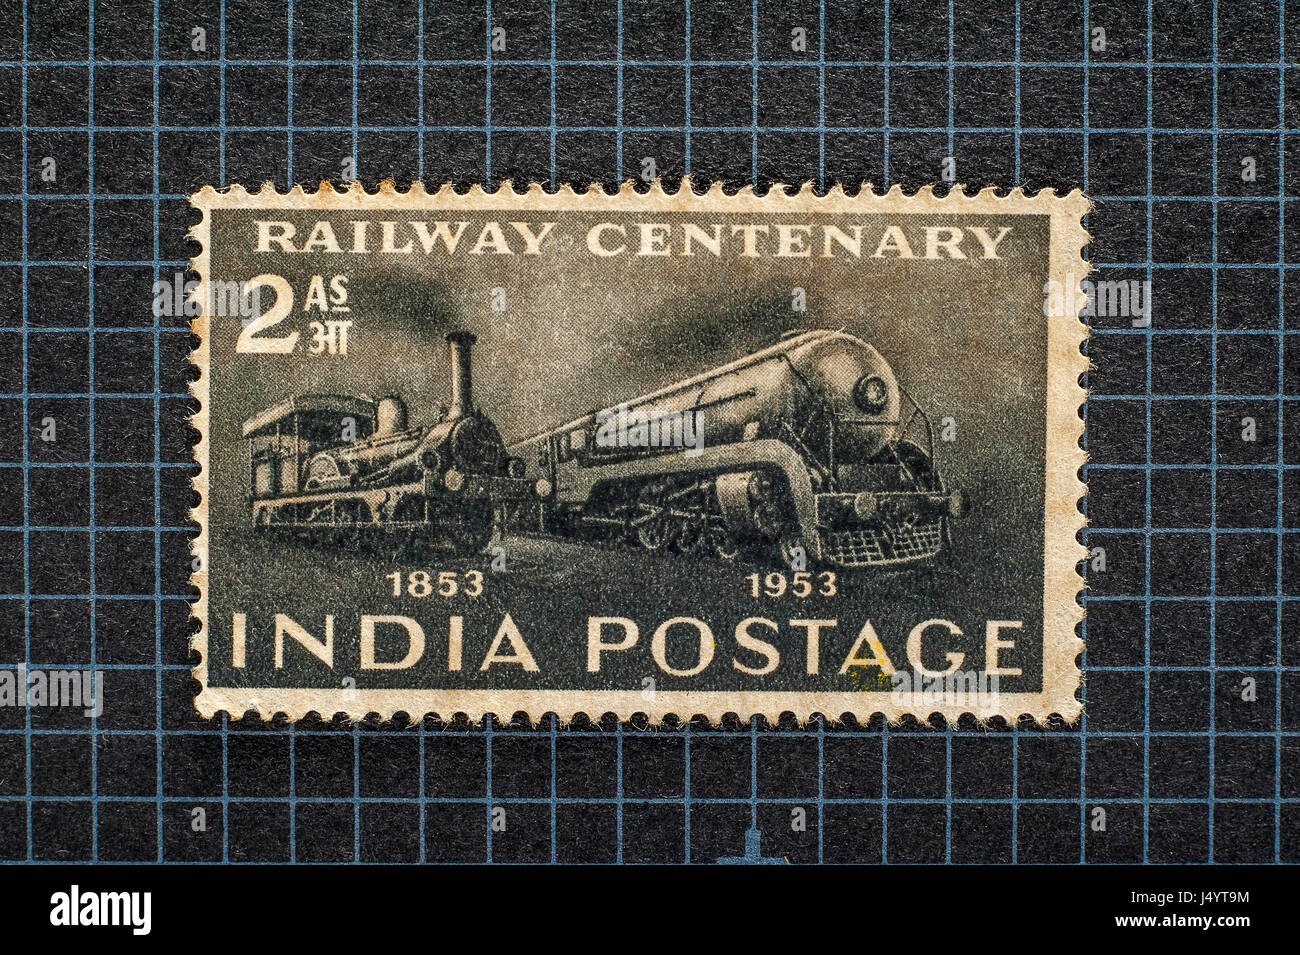 Francobollo d'epoca 2 anna of Indian Railway Centenary, India Postage, 1853 1953, India, Asia, vecchio francobollo Foto Stock